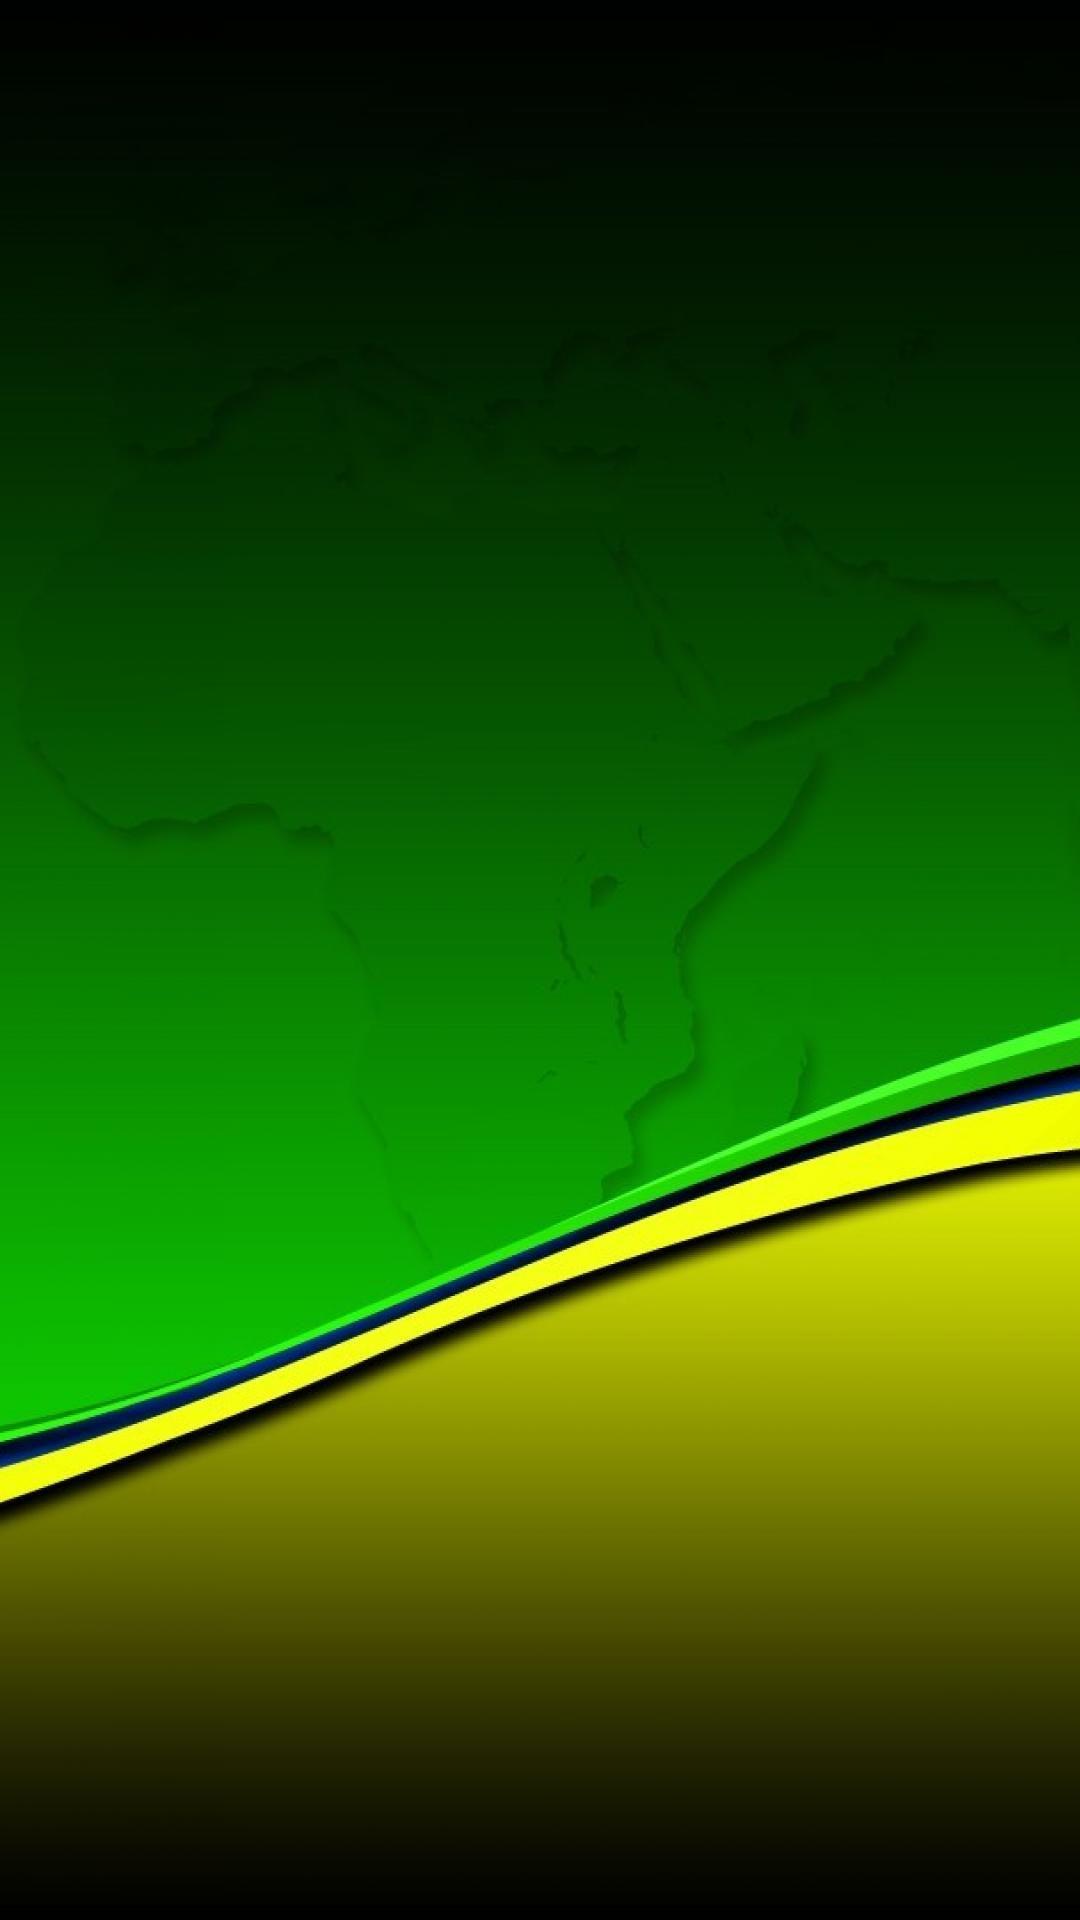 Brazil logos fussball colors futbol futebol cbf wallpaper